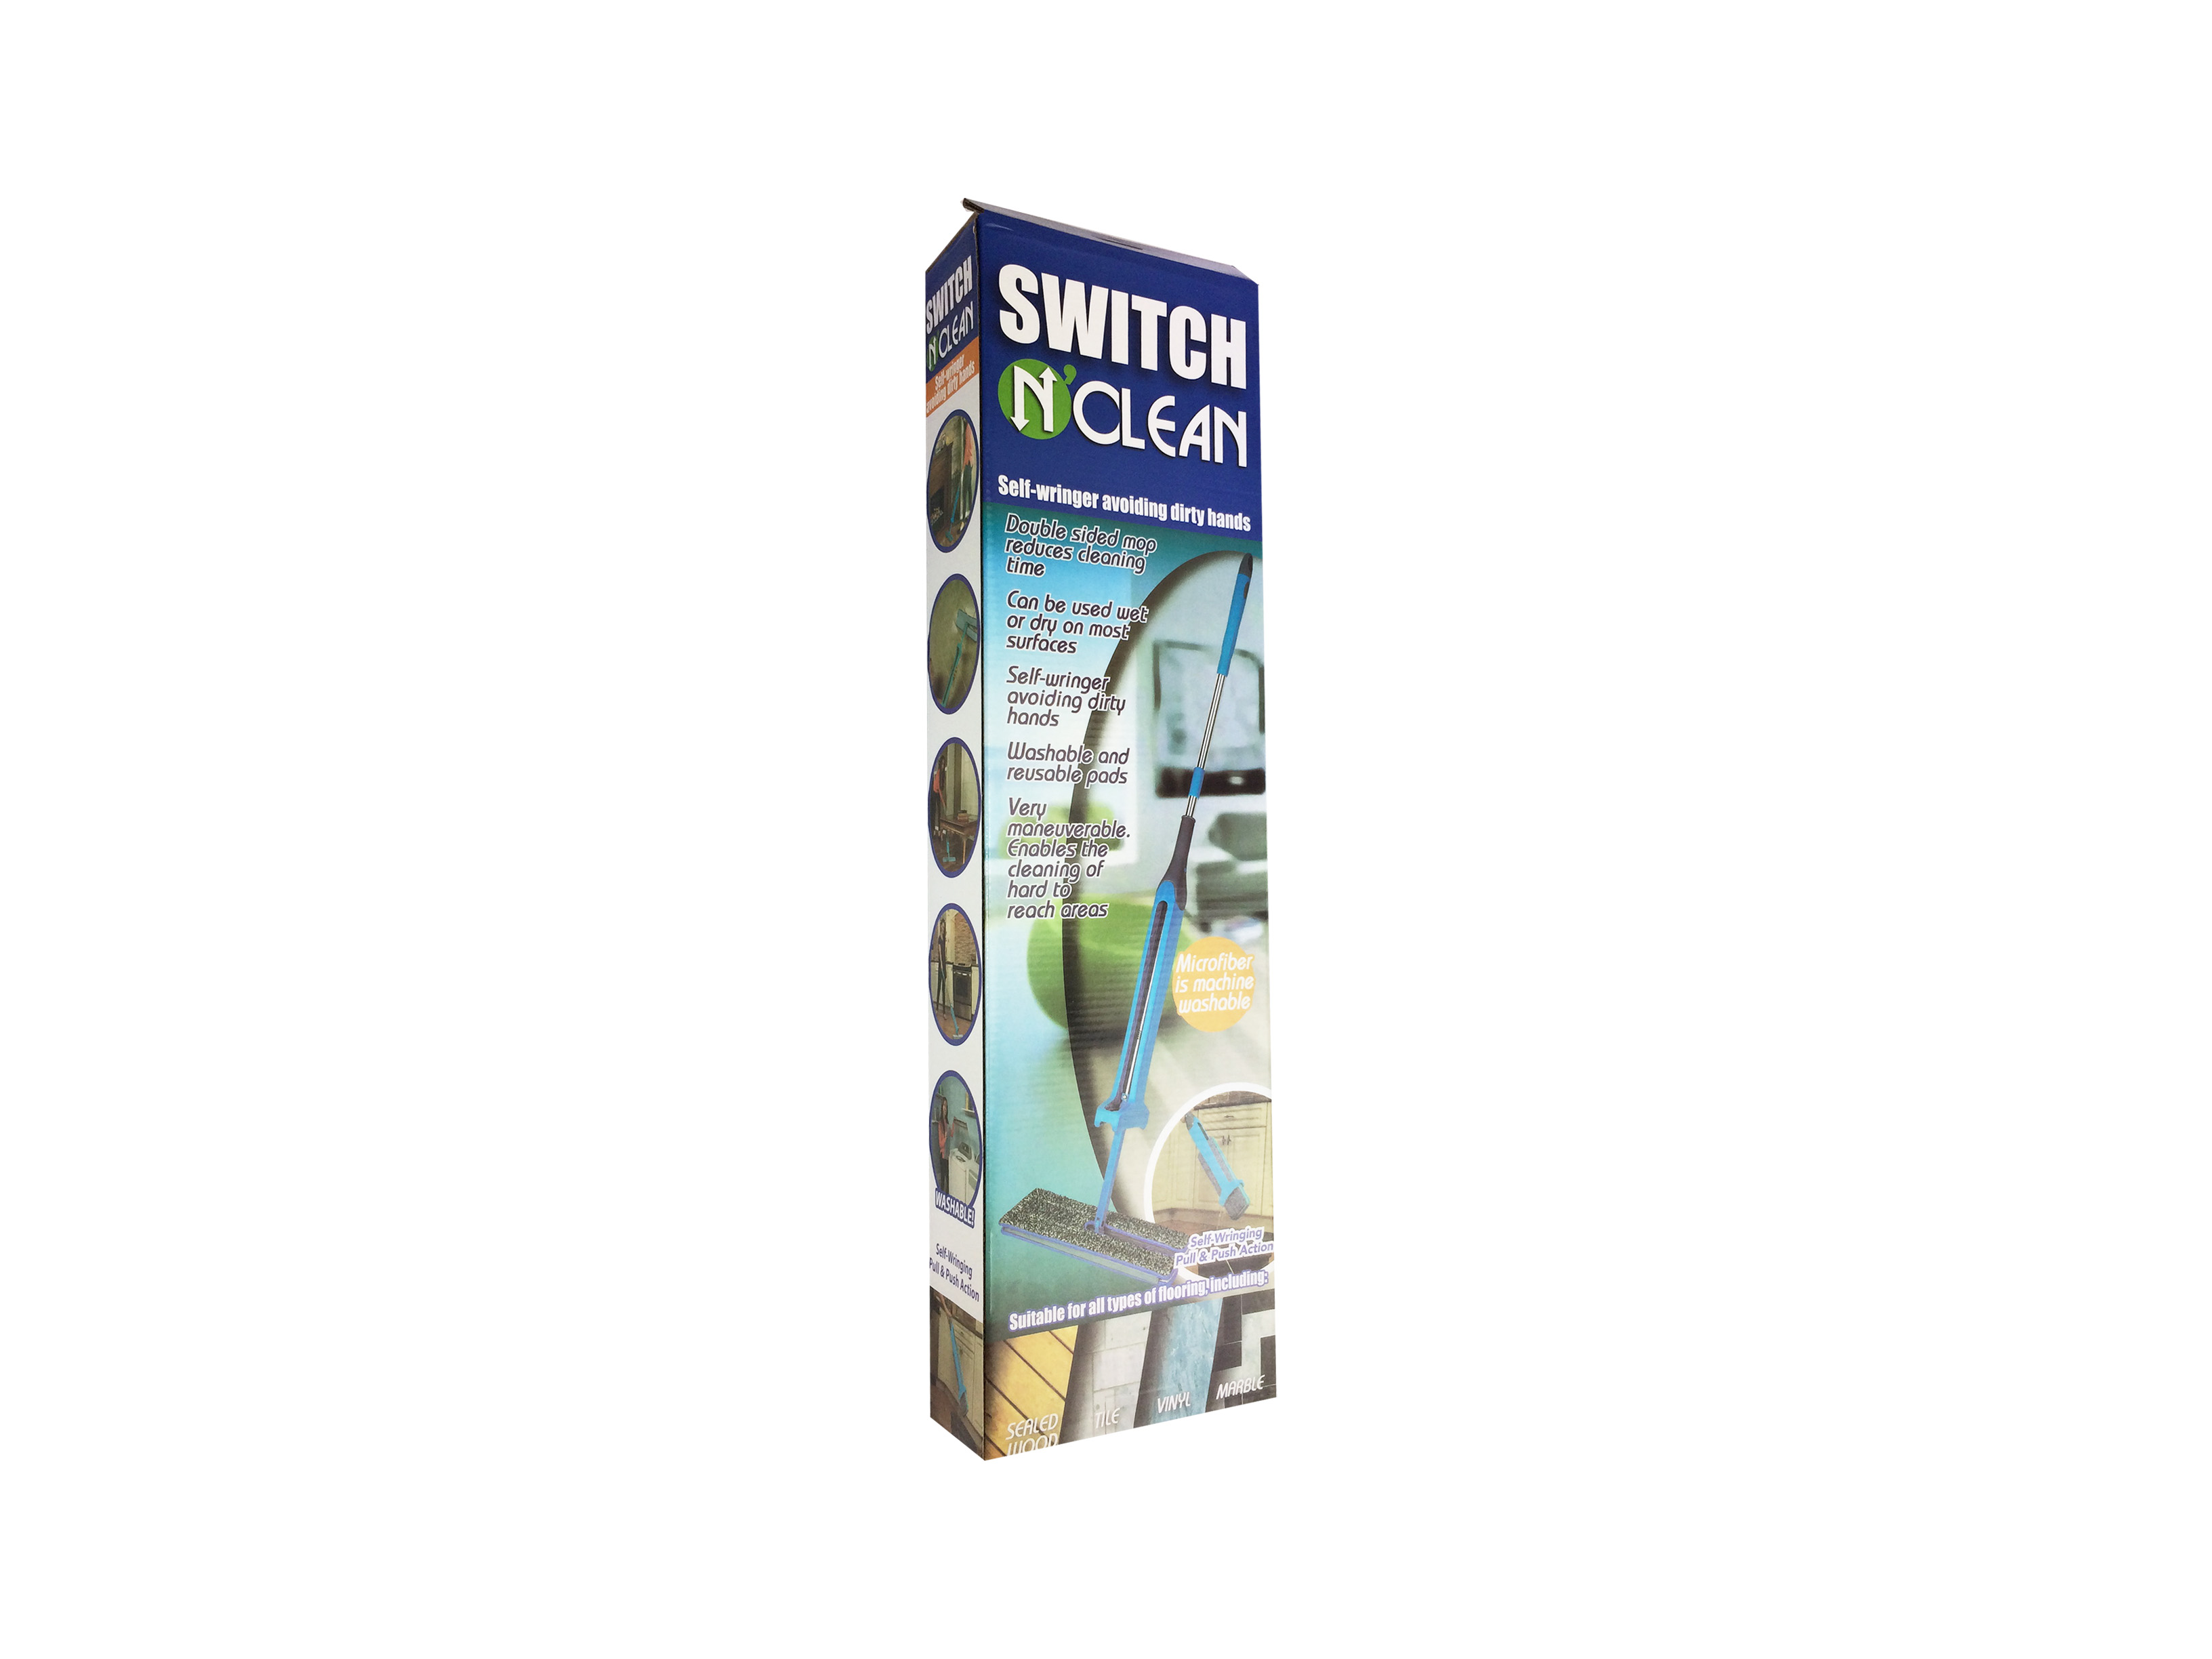 Самоотжимающаяся швабра Switch N Clean оптом - Фото №3